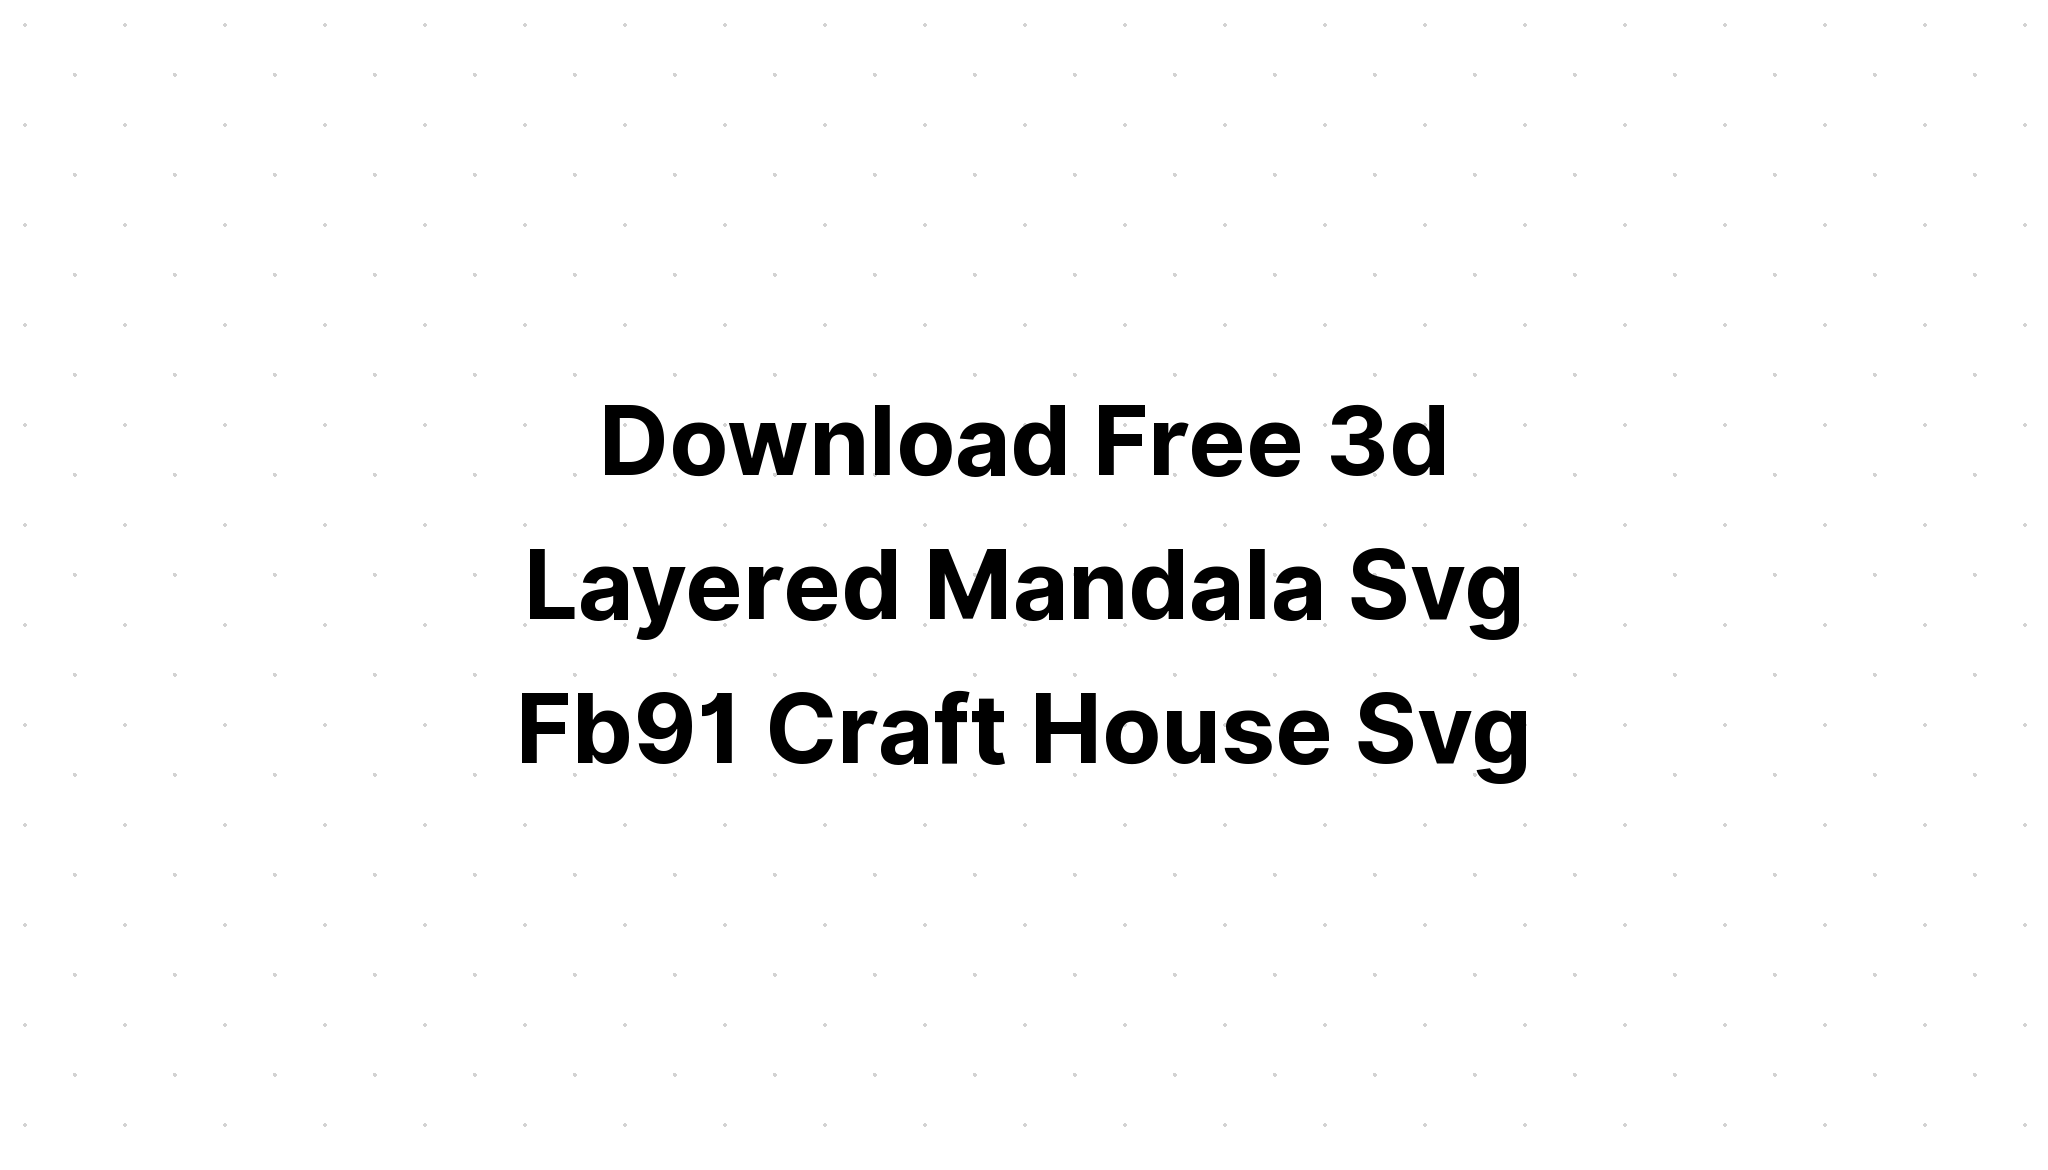 Download 3D Eagle 3D Mandala Svg - Layered SVG Cut File